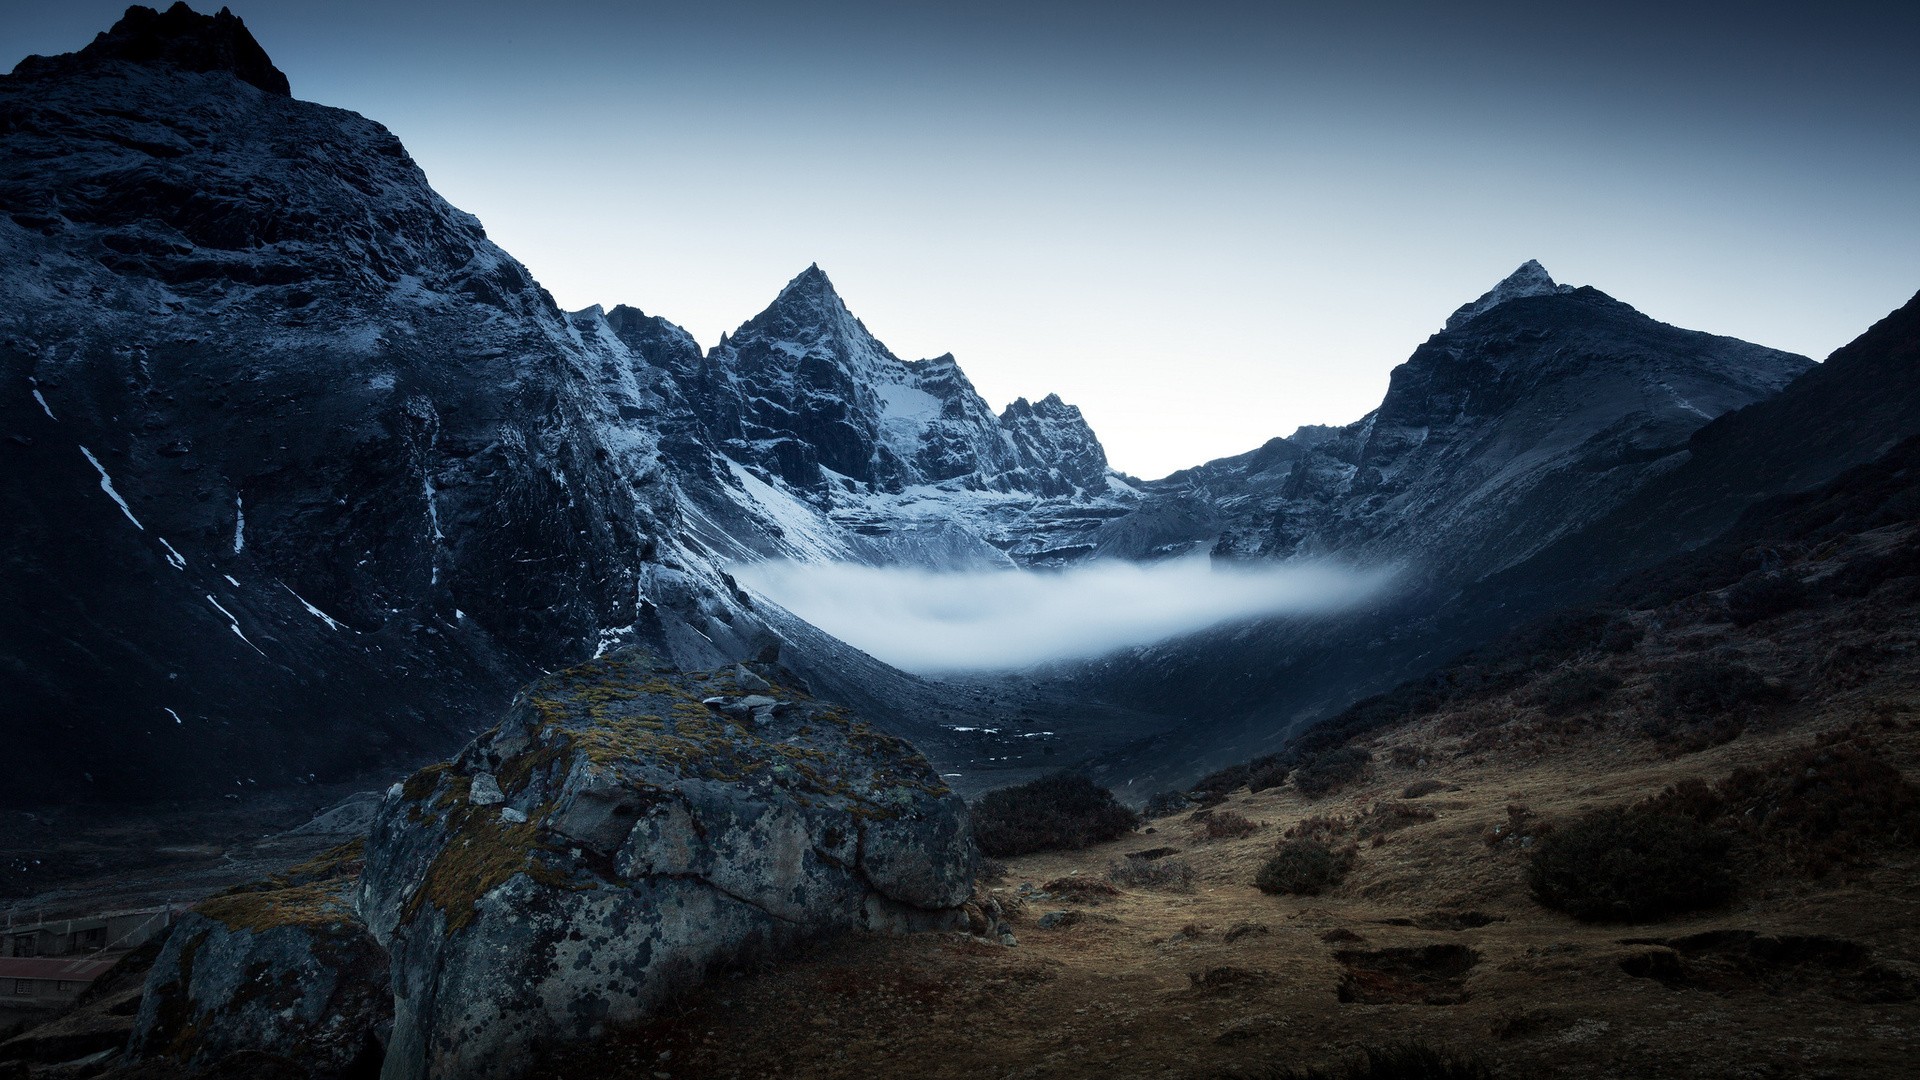 General 1920x1080 mountains mist nature landscape rocks Nepal snowy peak